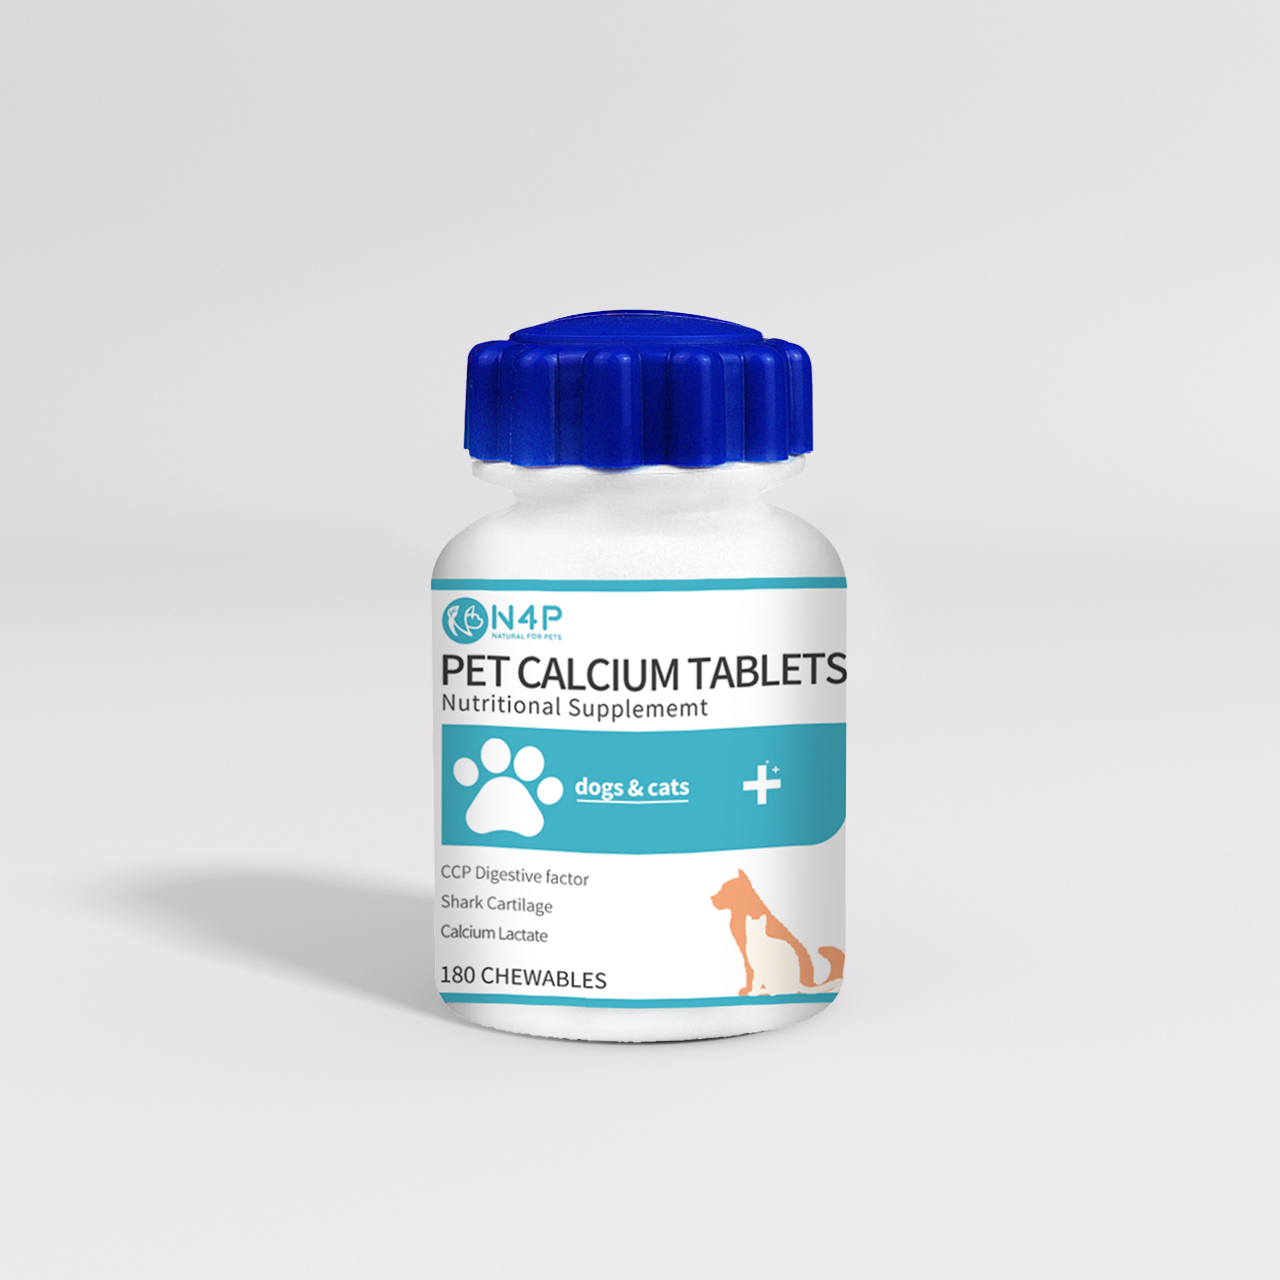 N4P Pet Calcium Tablets